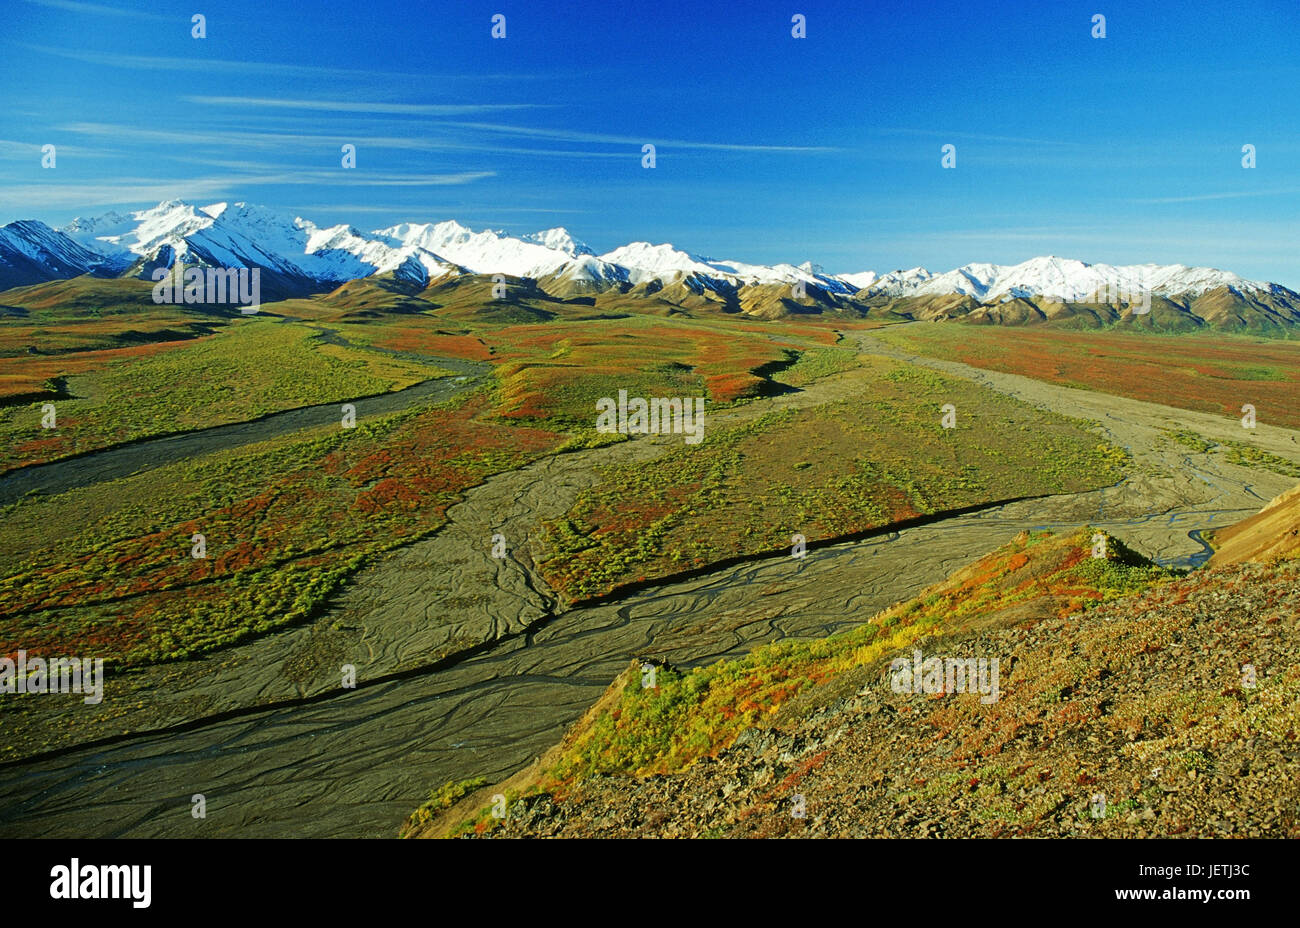 The mountains Alaska to rank with the coloured autumn tundra in the foreground, Denali N.P., Alaska, Die Berge der Alaska Range mit der farbigen Herbs Stock Photo